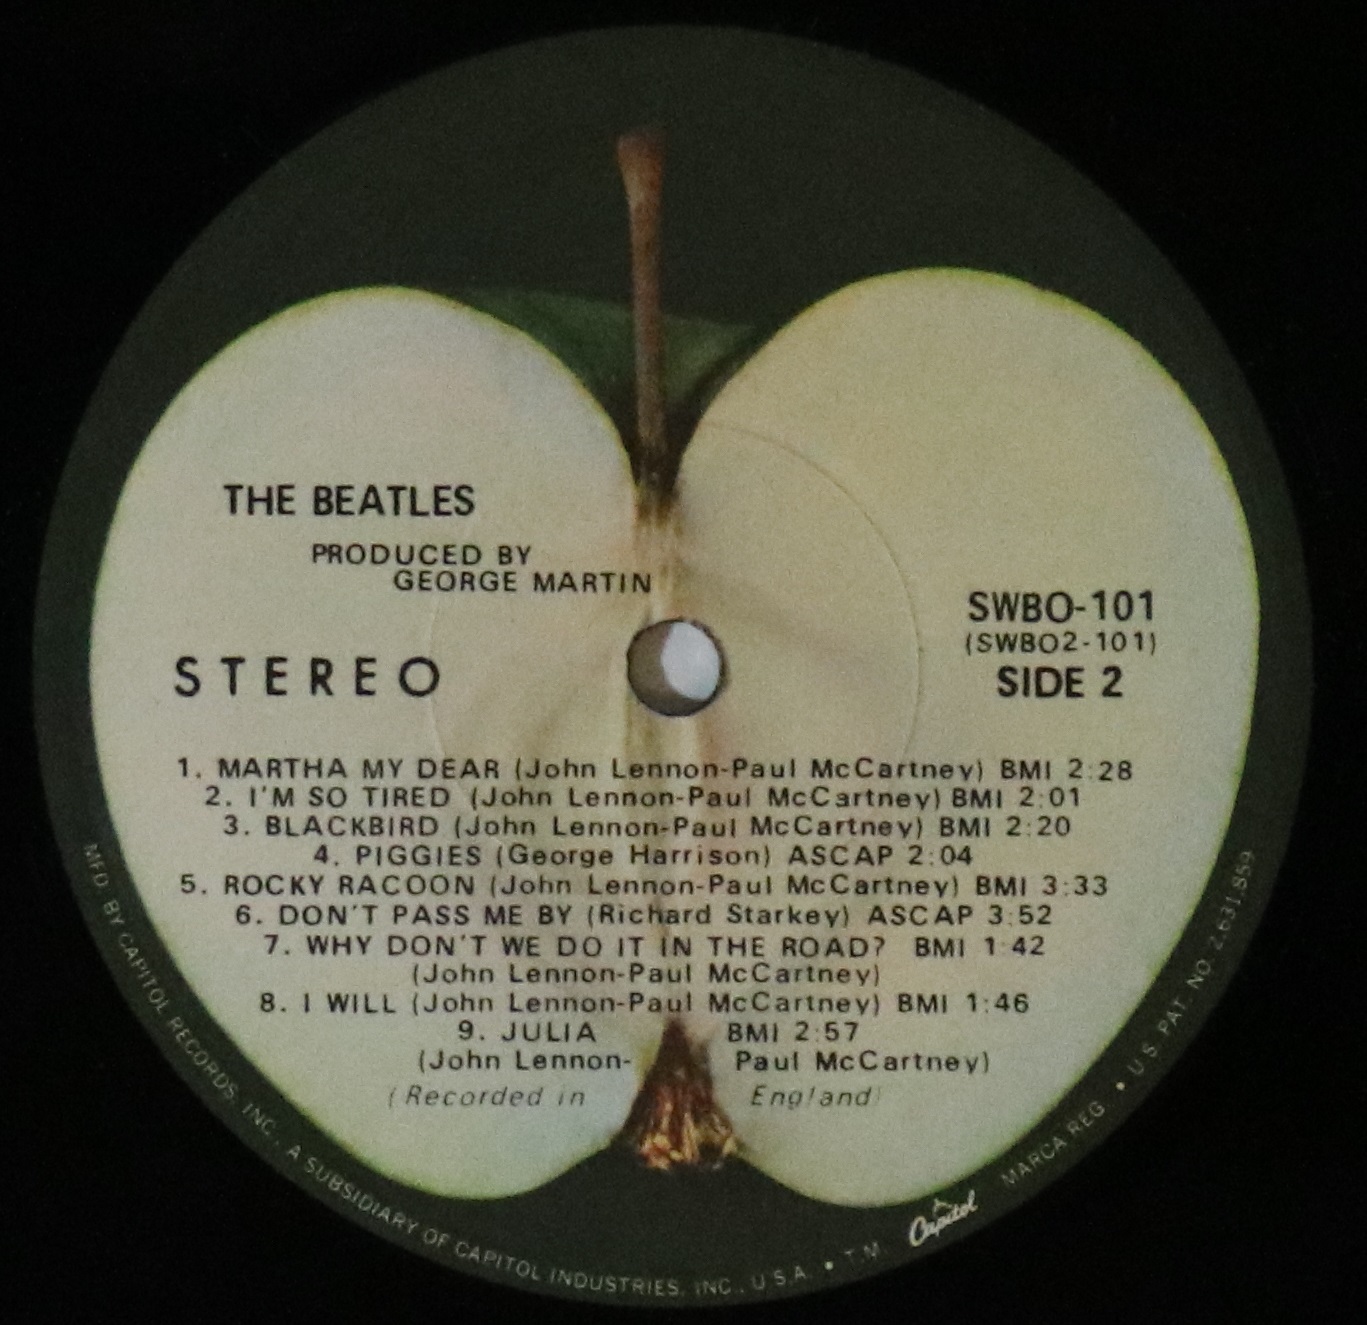 THE BEATLES - THE BEATLES (WHITE ALBUM) - US '2ND' PRESSING LP (APPLE SWBO-101). - Image 4 of 9